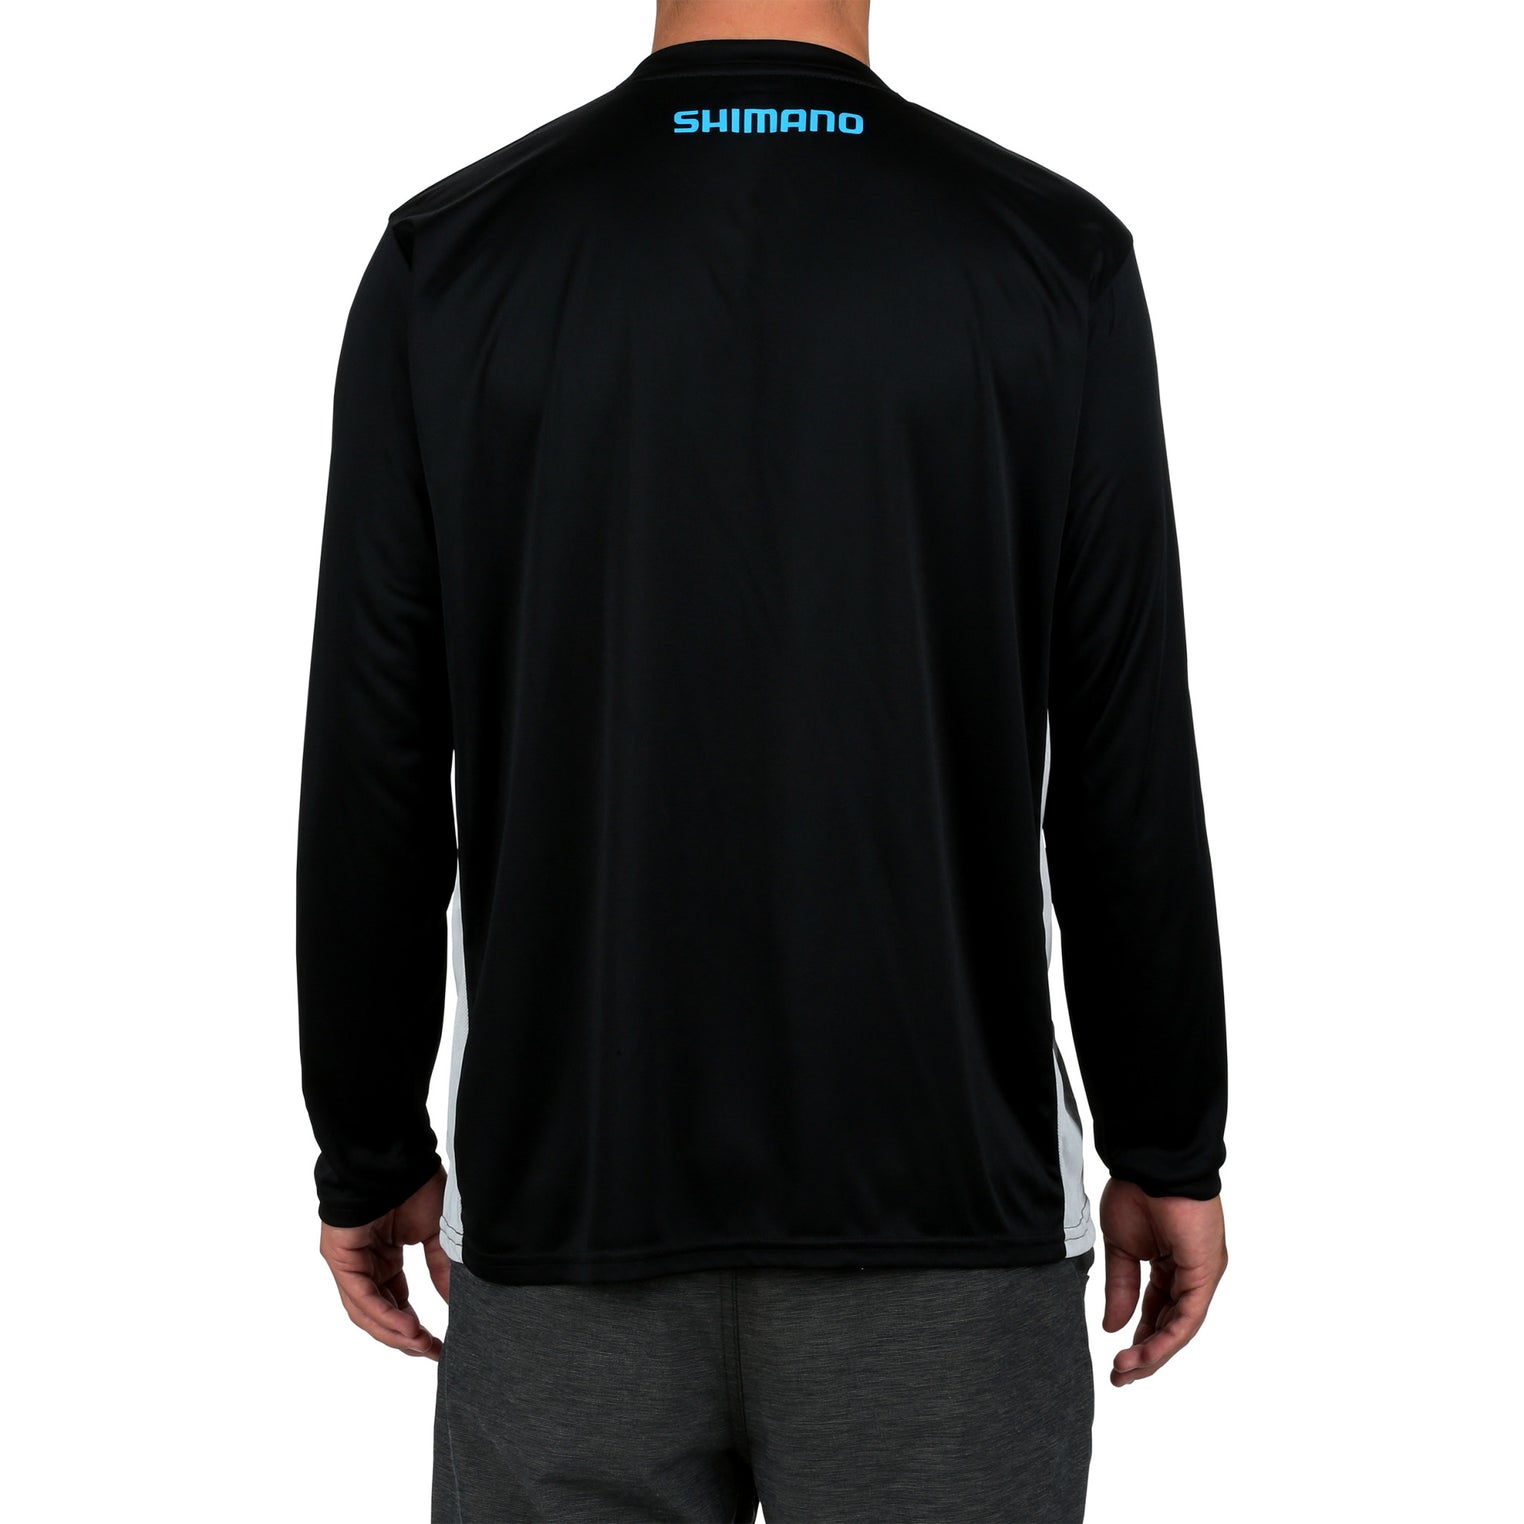 Shimano Fishing Gear T-shirt Black New Ready Stock